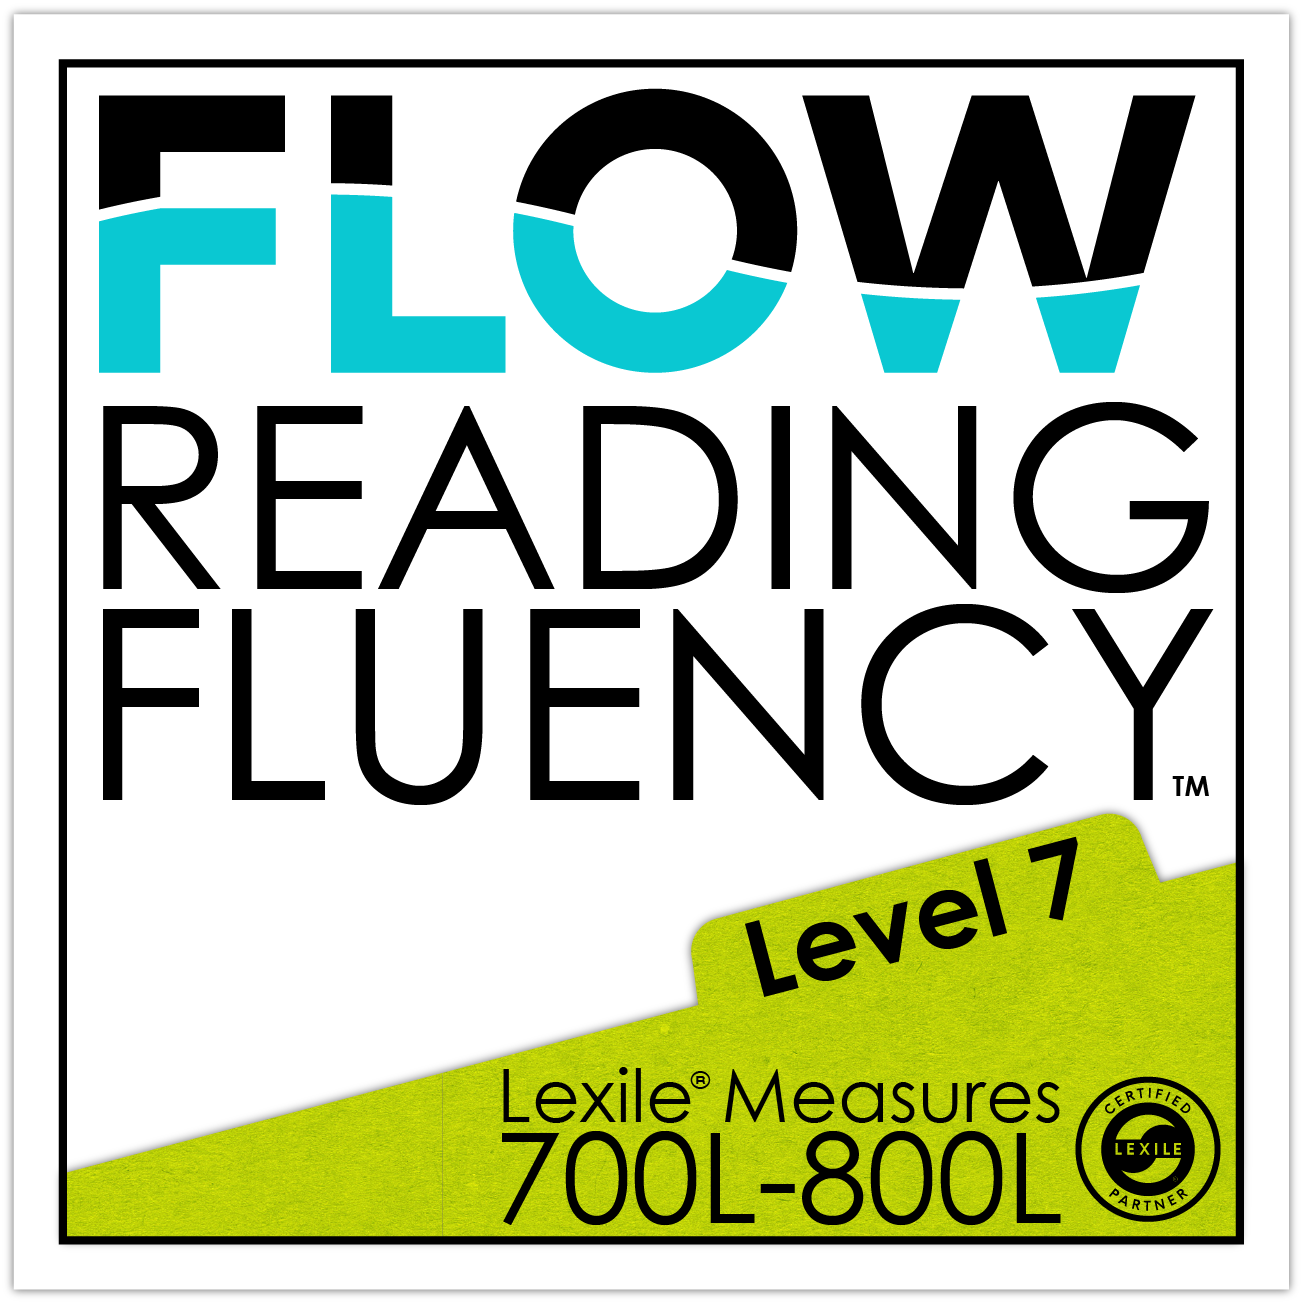 reading fluency